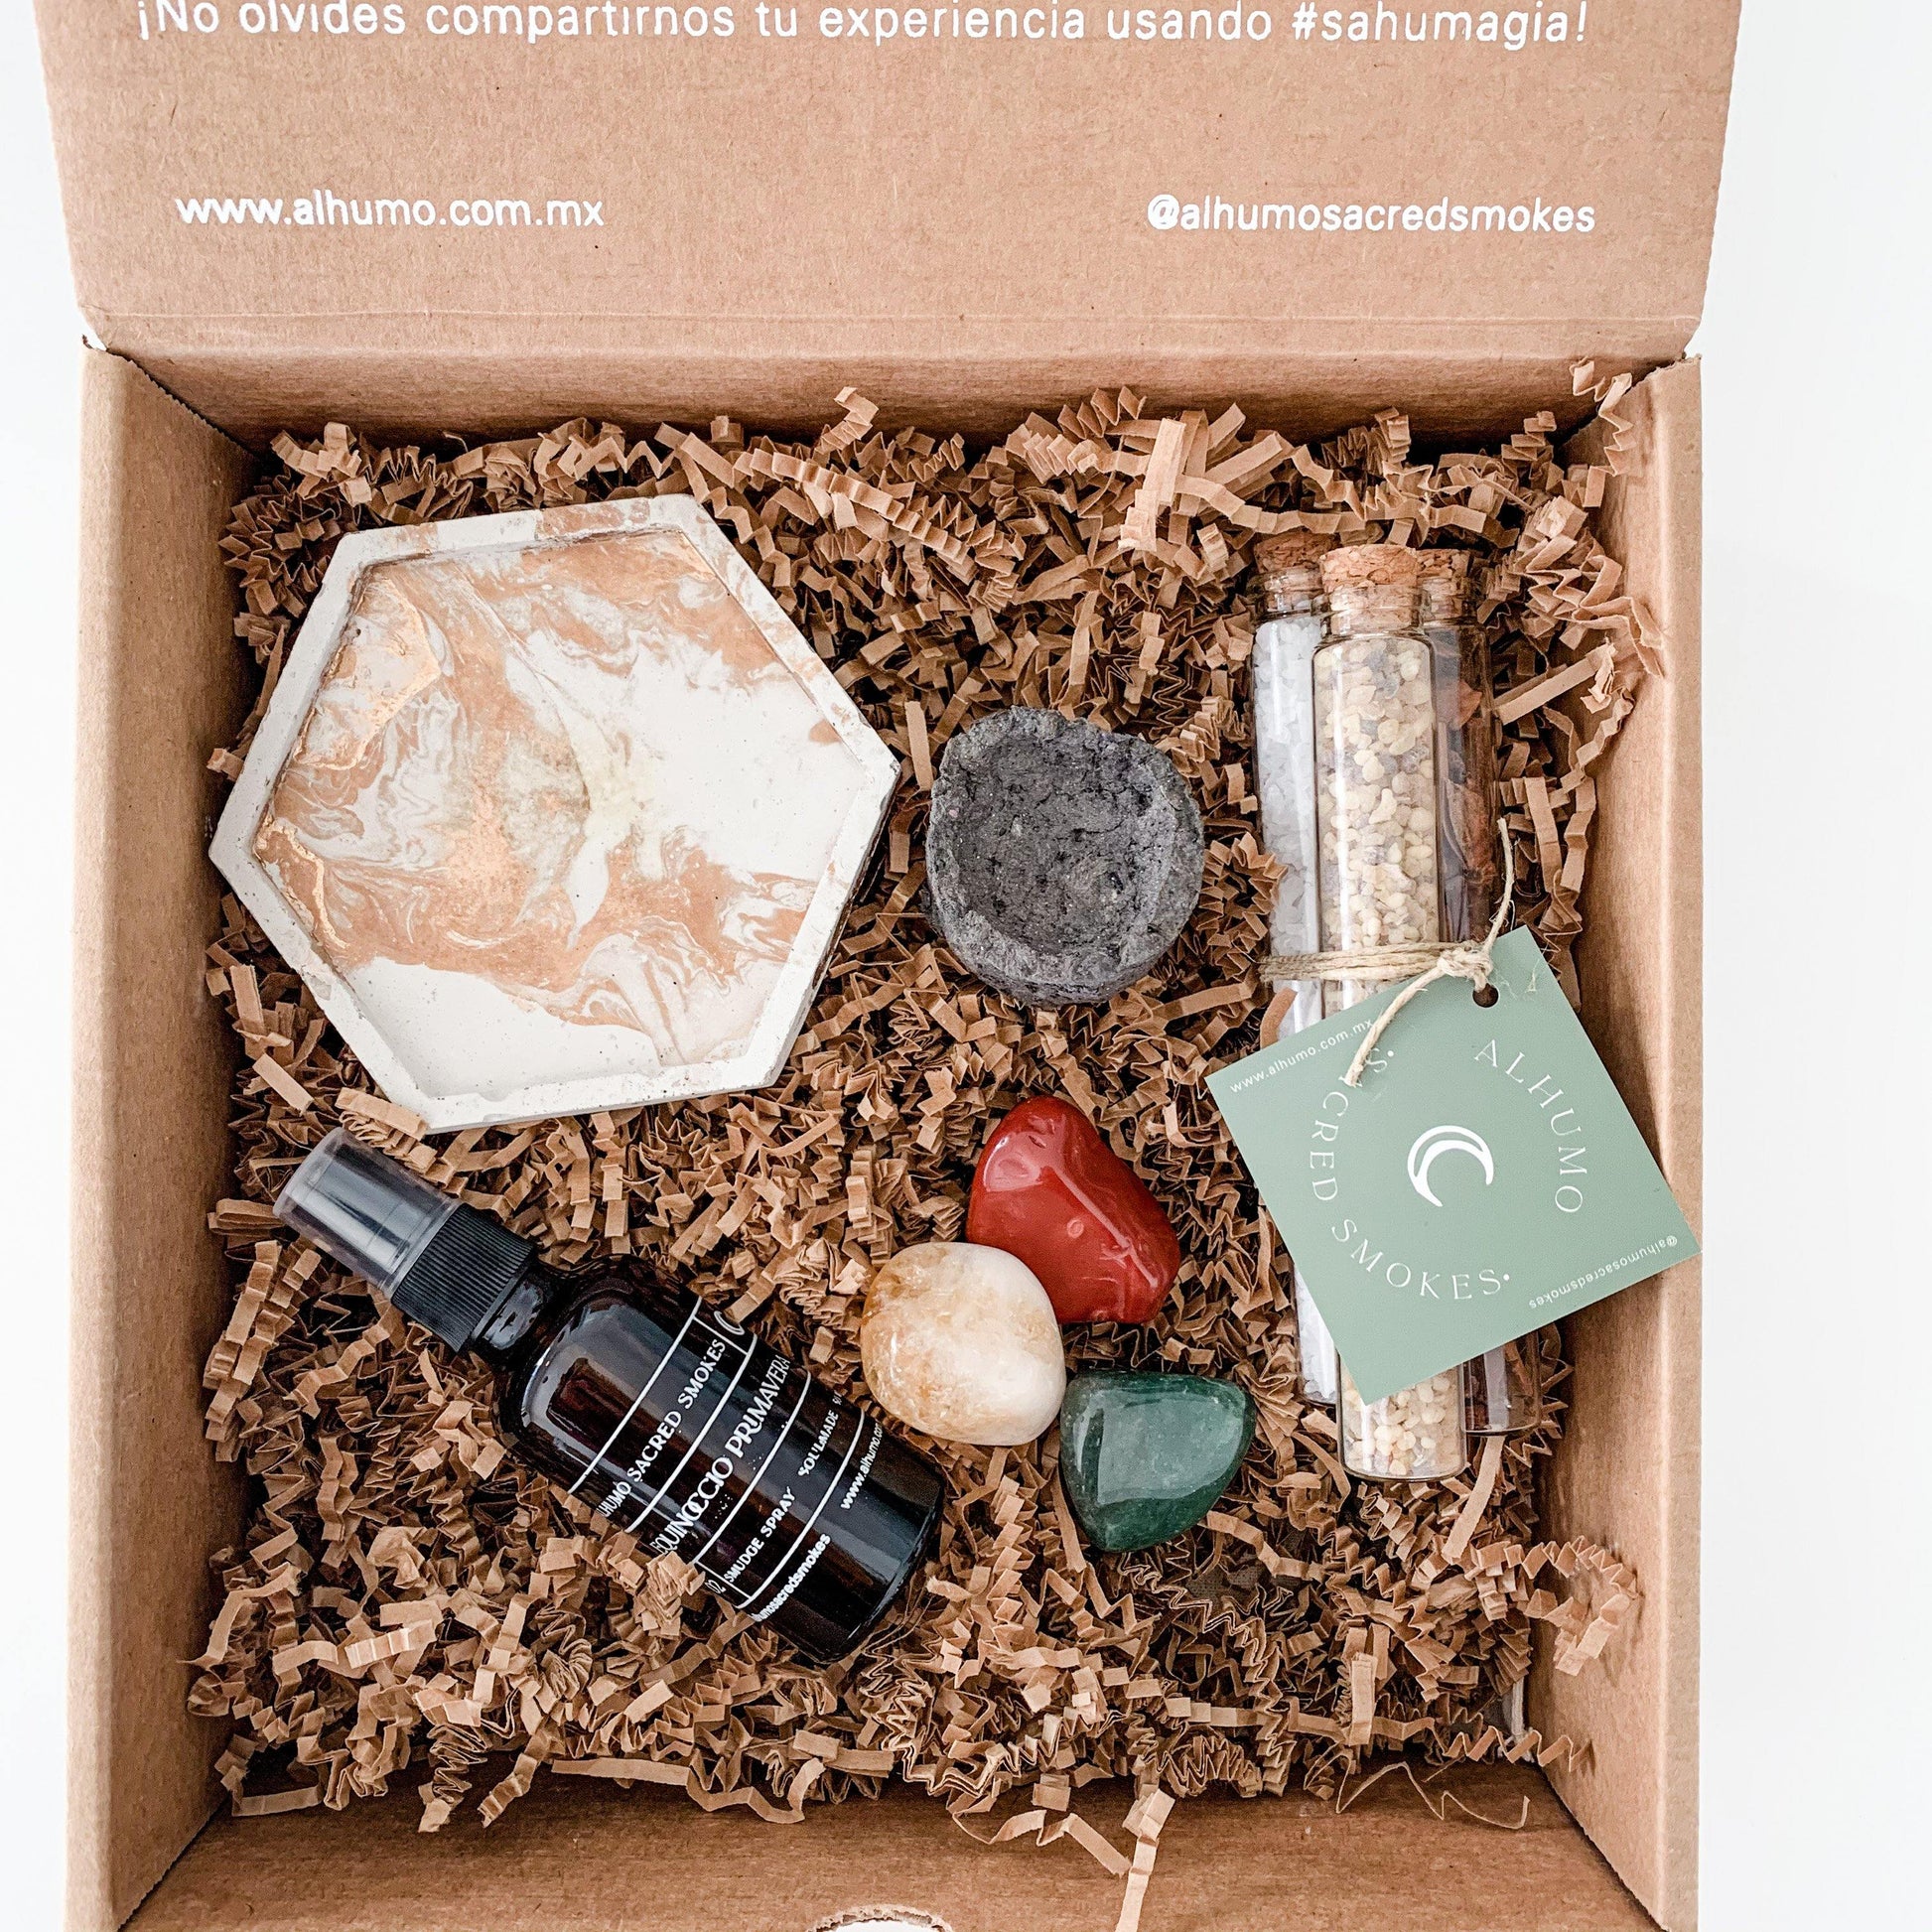 Infinity Box - Kit de Abundancia - Alhumo Sacred Smokes